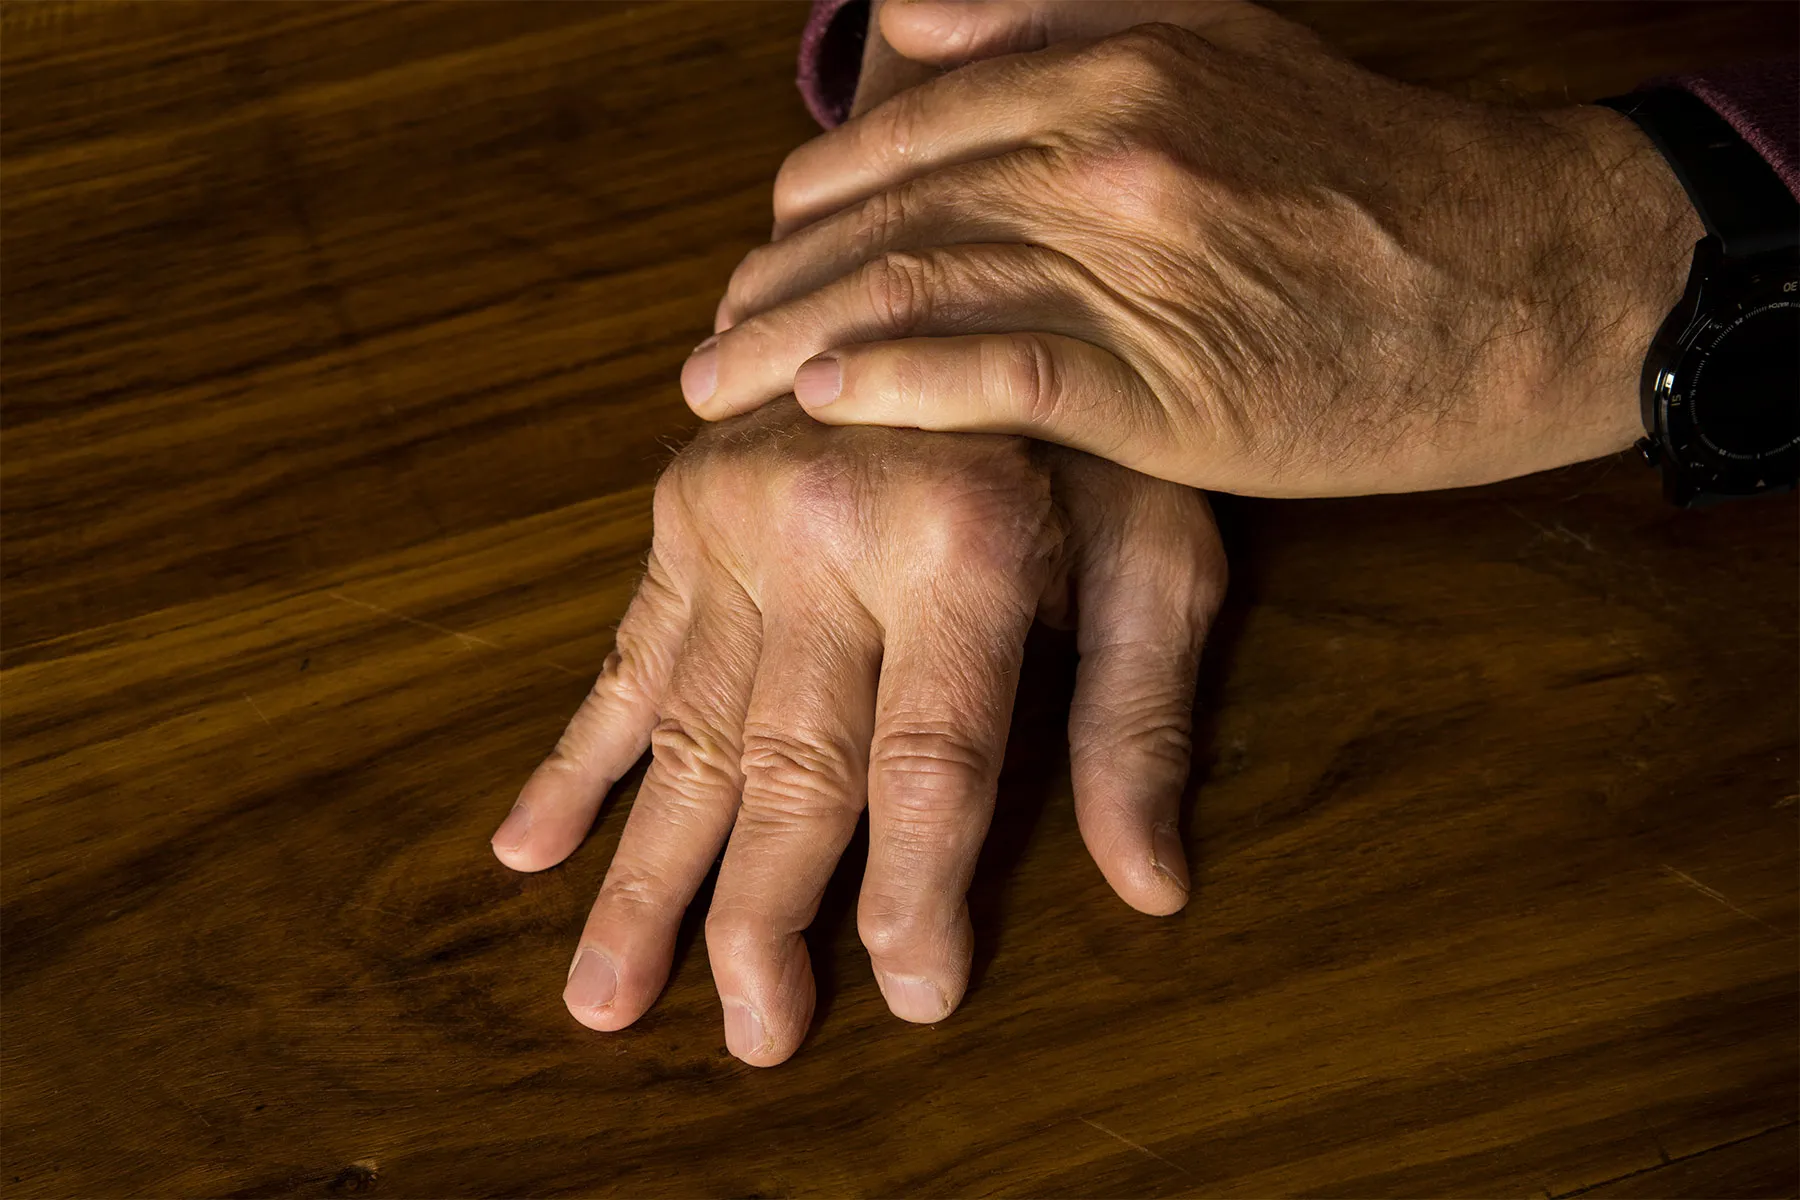 Spotlight: trends I see in psoriatic arthritis treatment